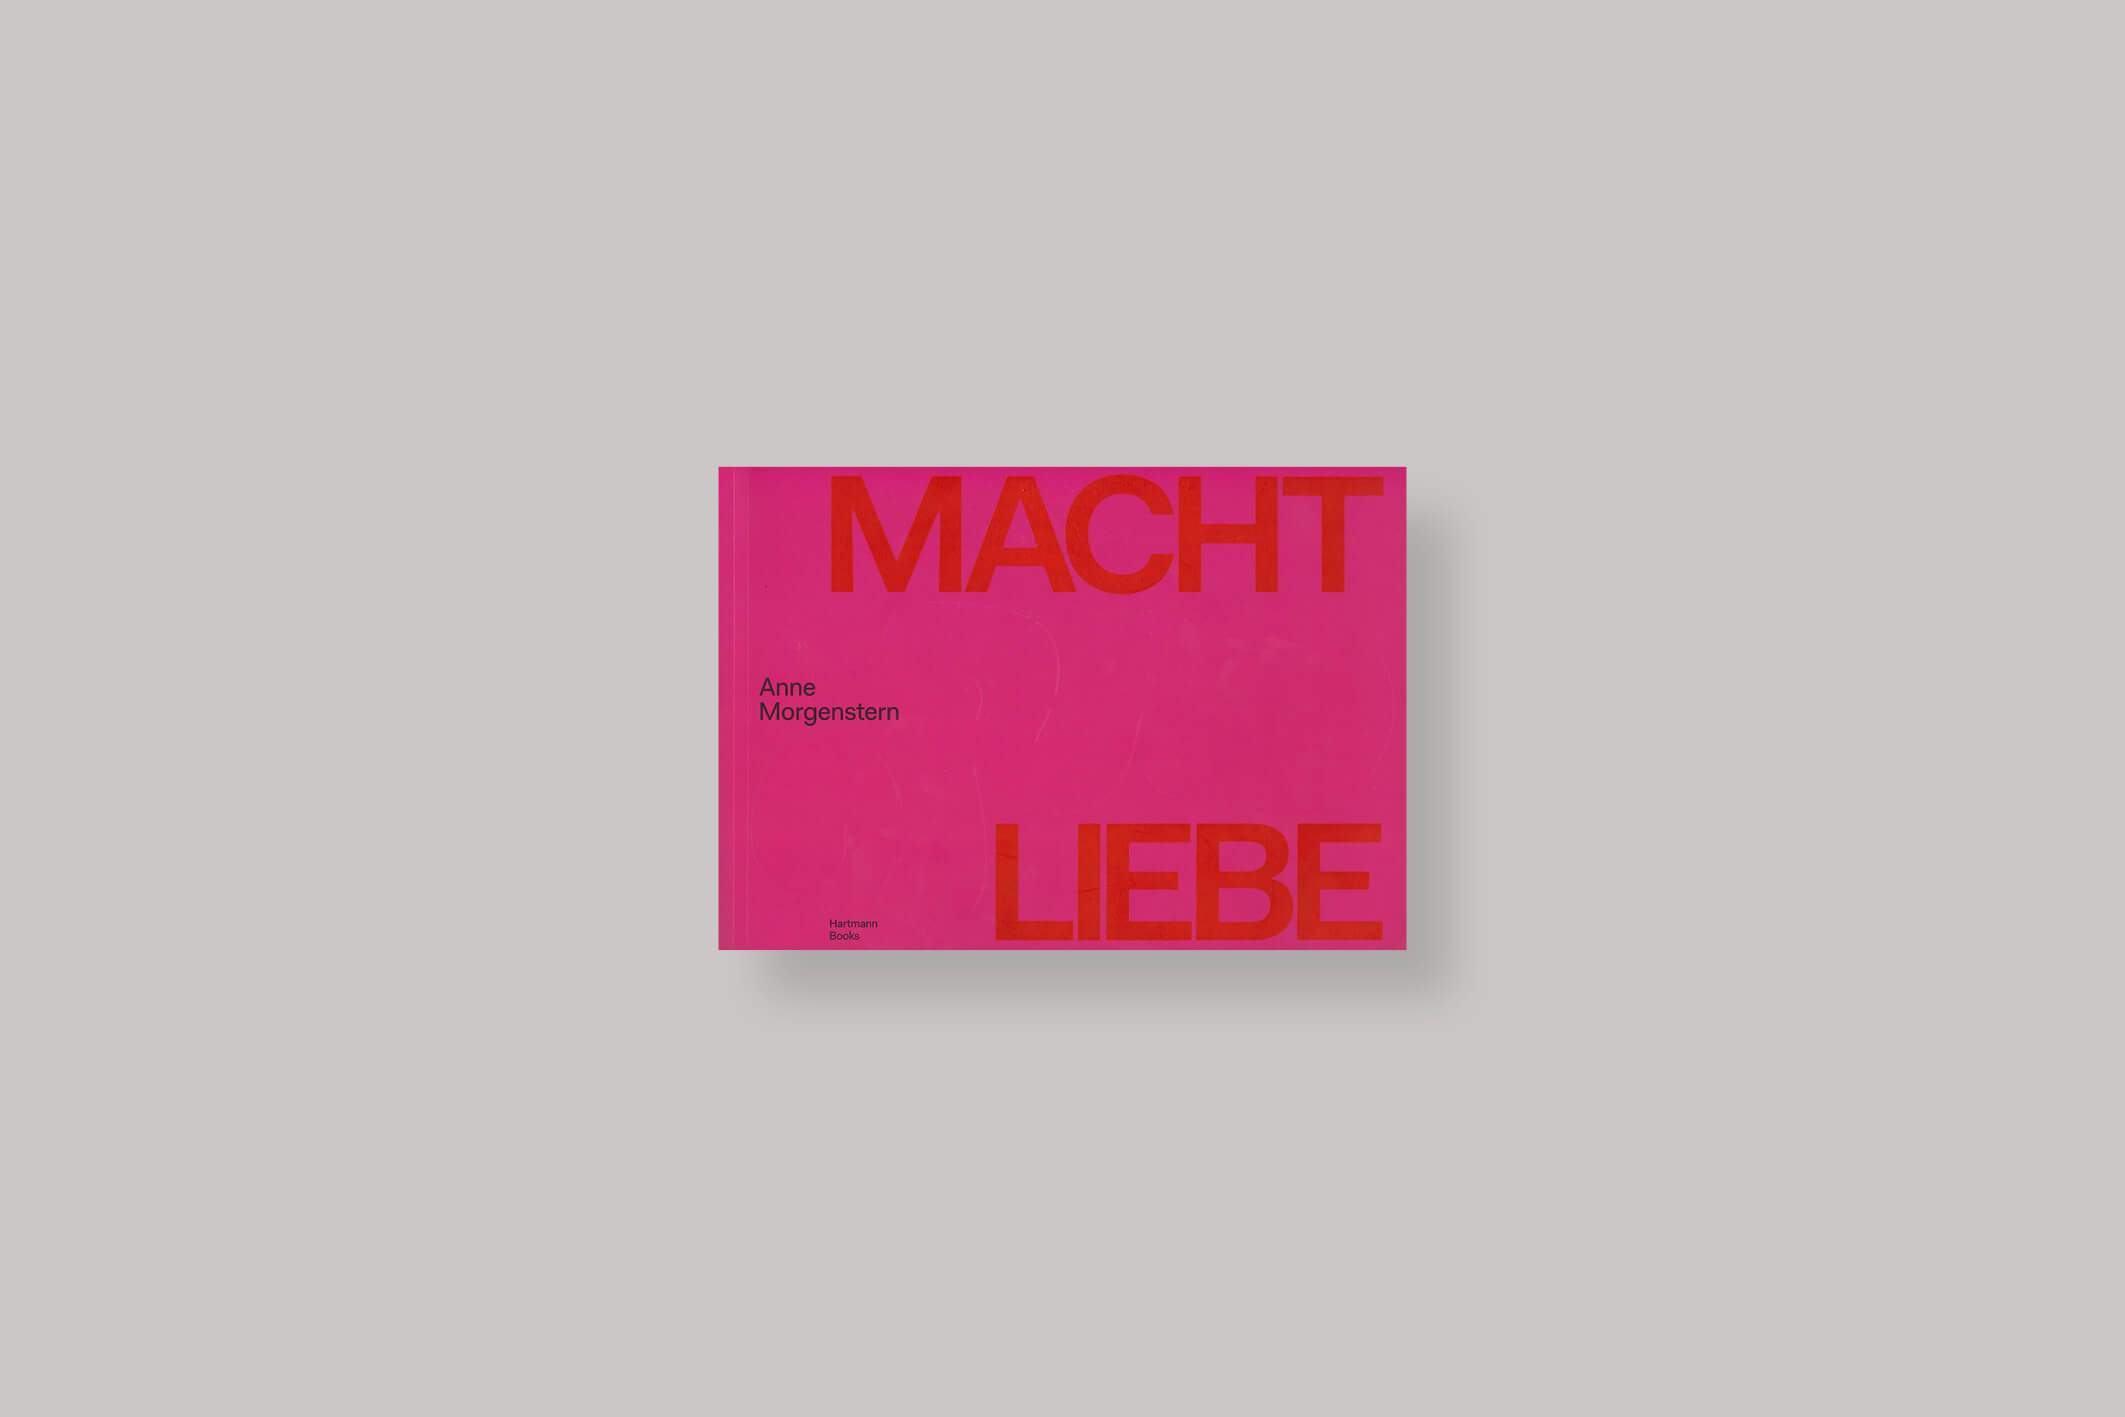 Macht-Liebe-Anne-Morgenstern-Editions-Hartmann-Books-Cover